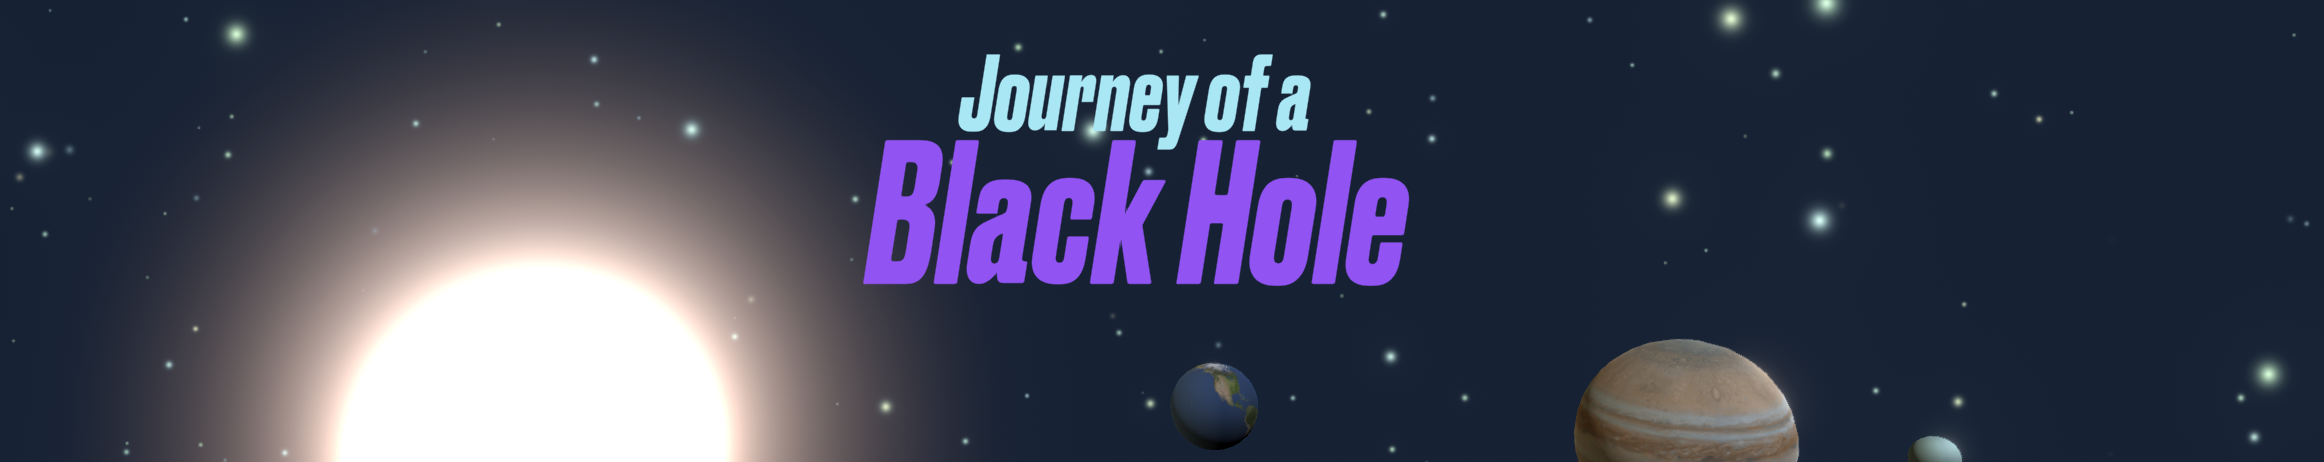 Journey of a Black Hole